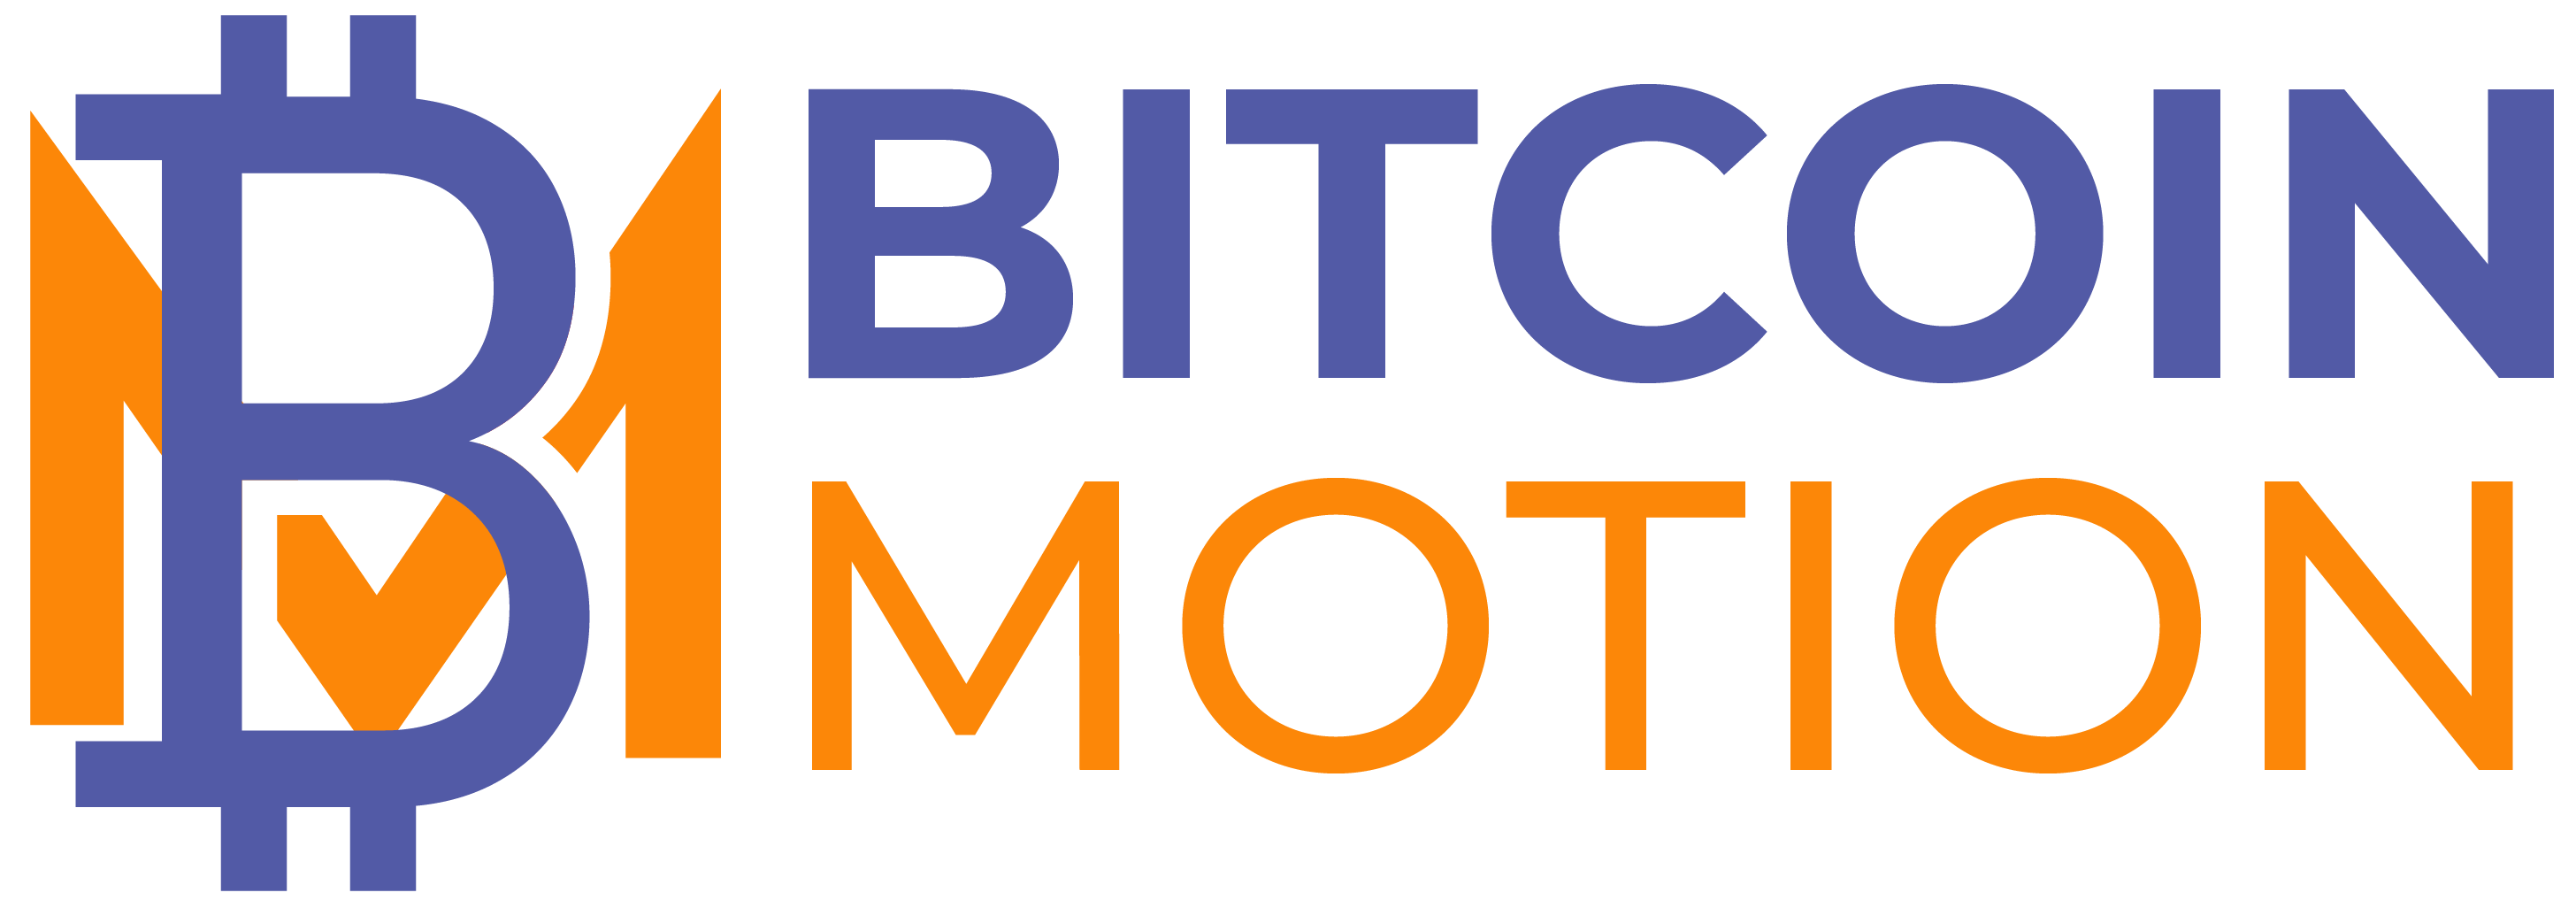 Bitcoin Motion - ทีมงาน Bitcoin Motion